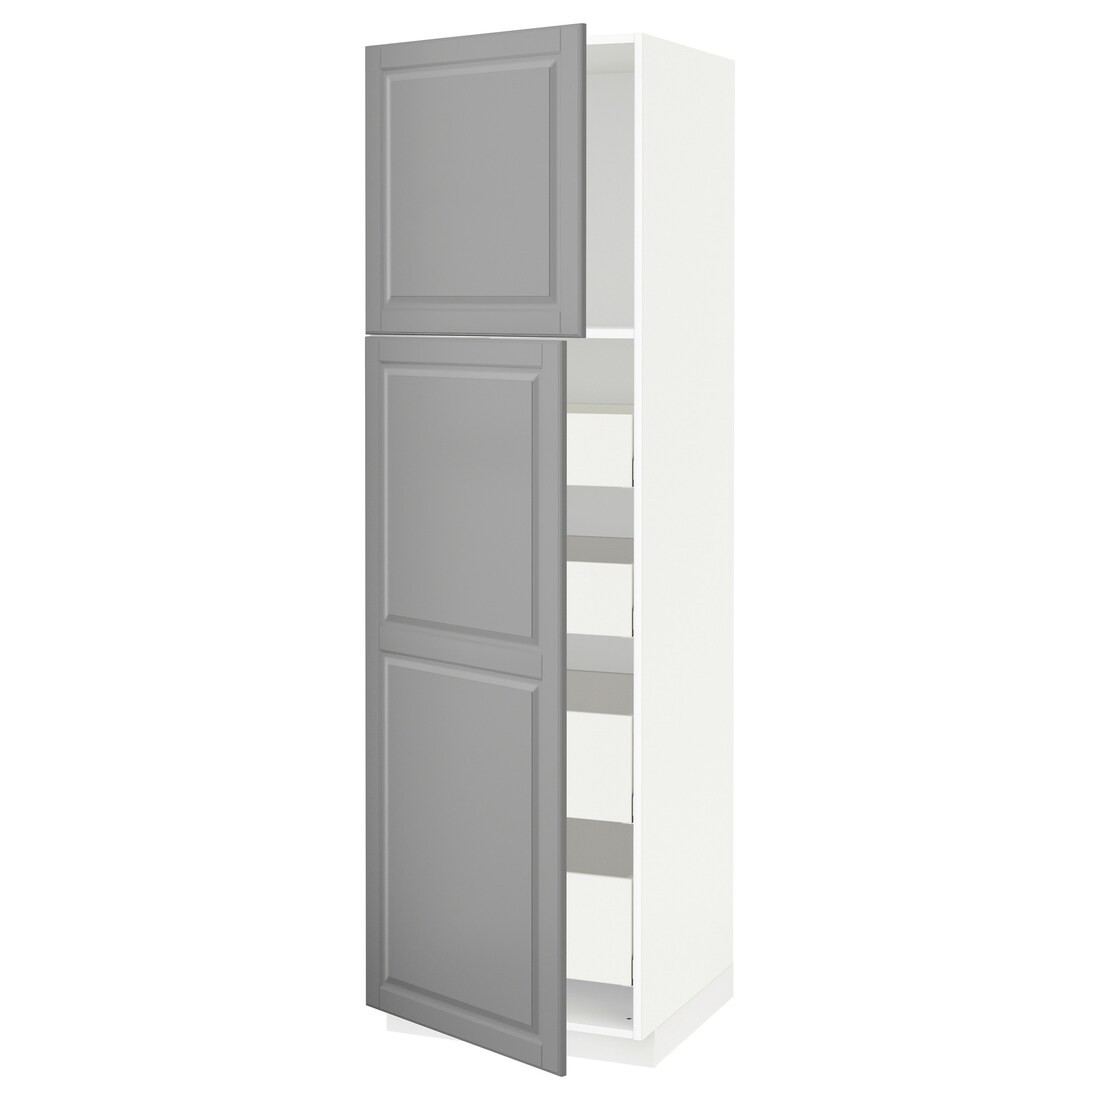 METOD МЕТОД / MAXIMERA МАКСИМЕРА Шкаф высокий 2 двери / 4 ящика, белый / Bodbyn серый, 60x60x200 см